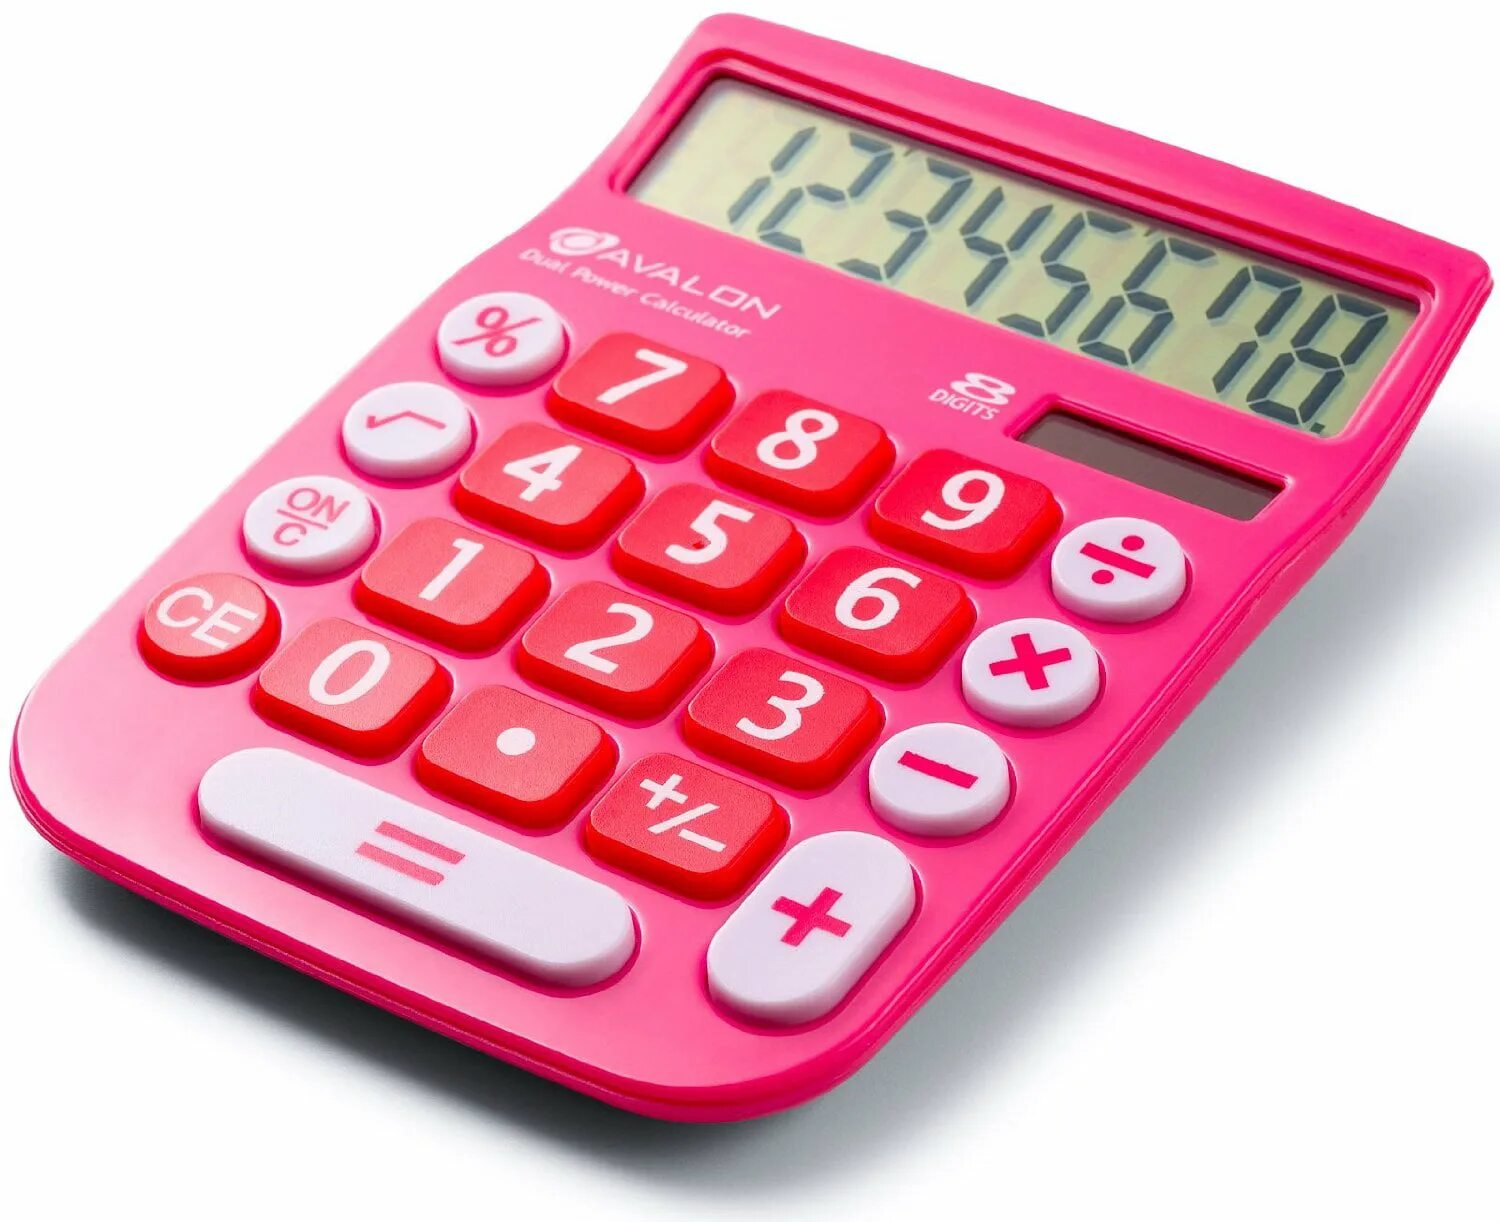 Mybuh калькулятор. Электронный калькулятор. Розовый калькулятор. Красивый калькулятор. Калькулятор для детей.